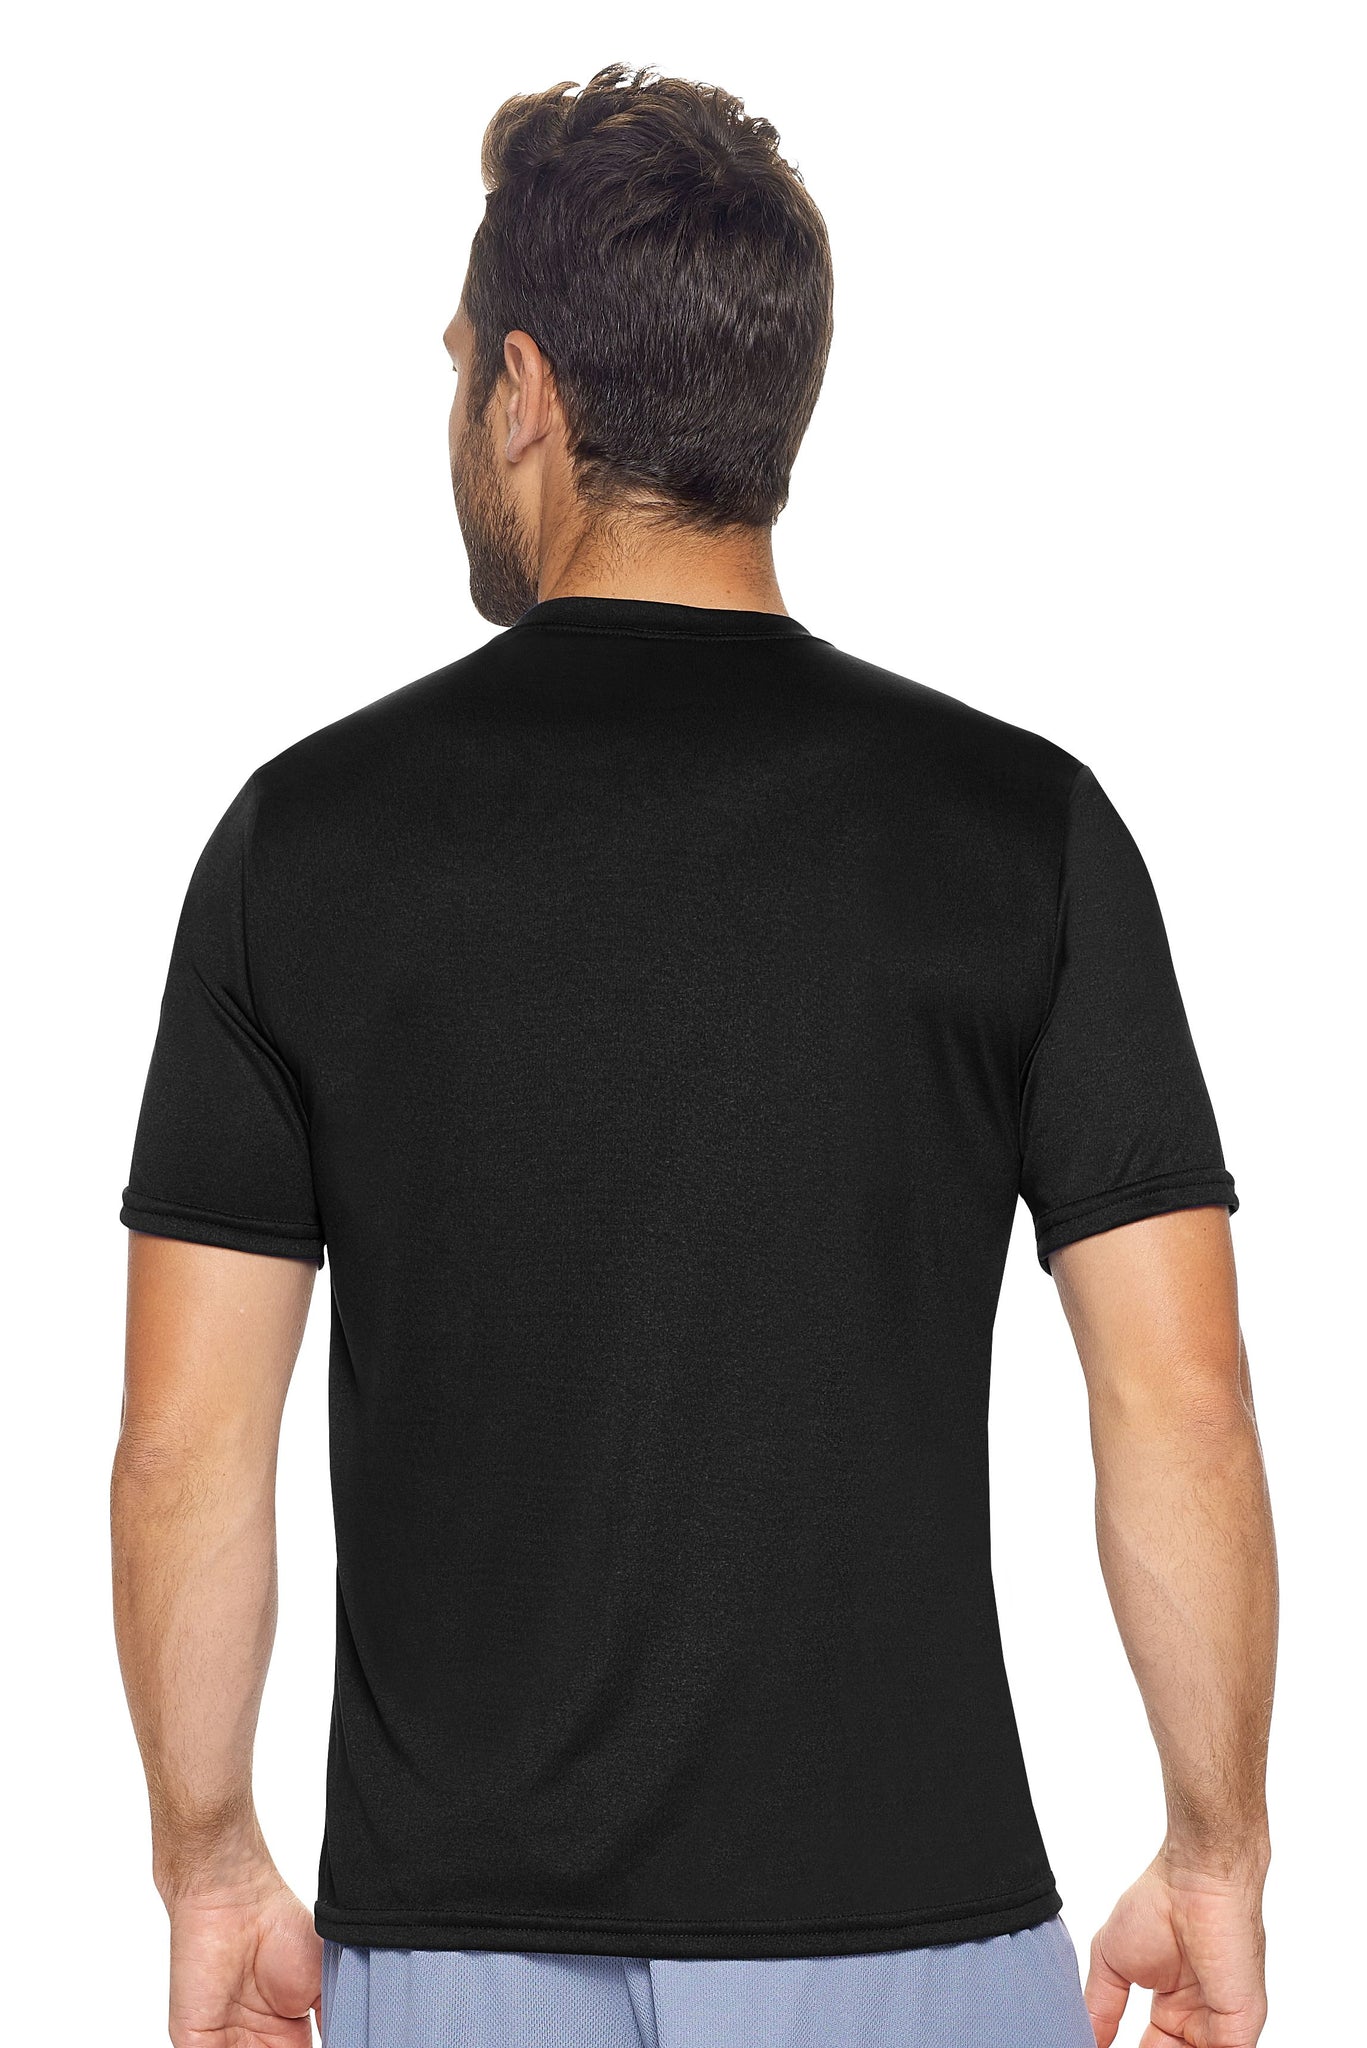 Expert Brand Wholesale Men's Short Sleeve Natural-Feel Jersey Crewneck in Black Image 3#black